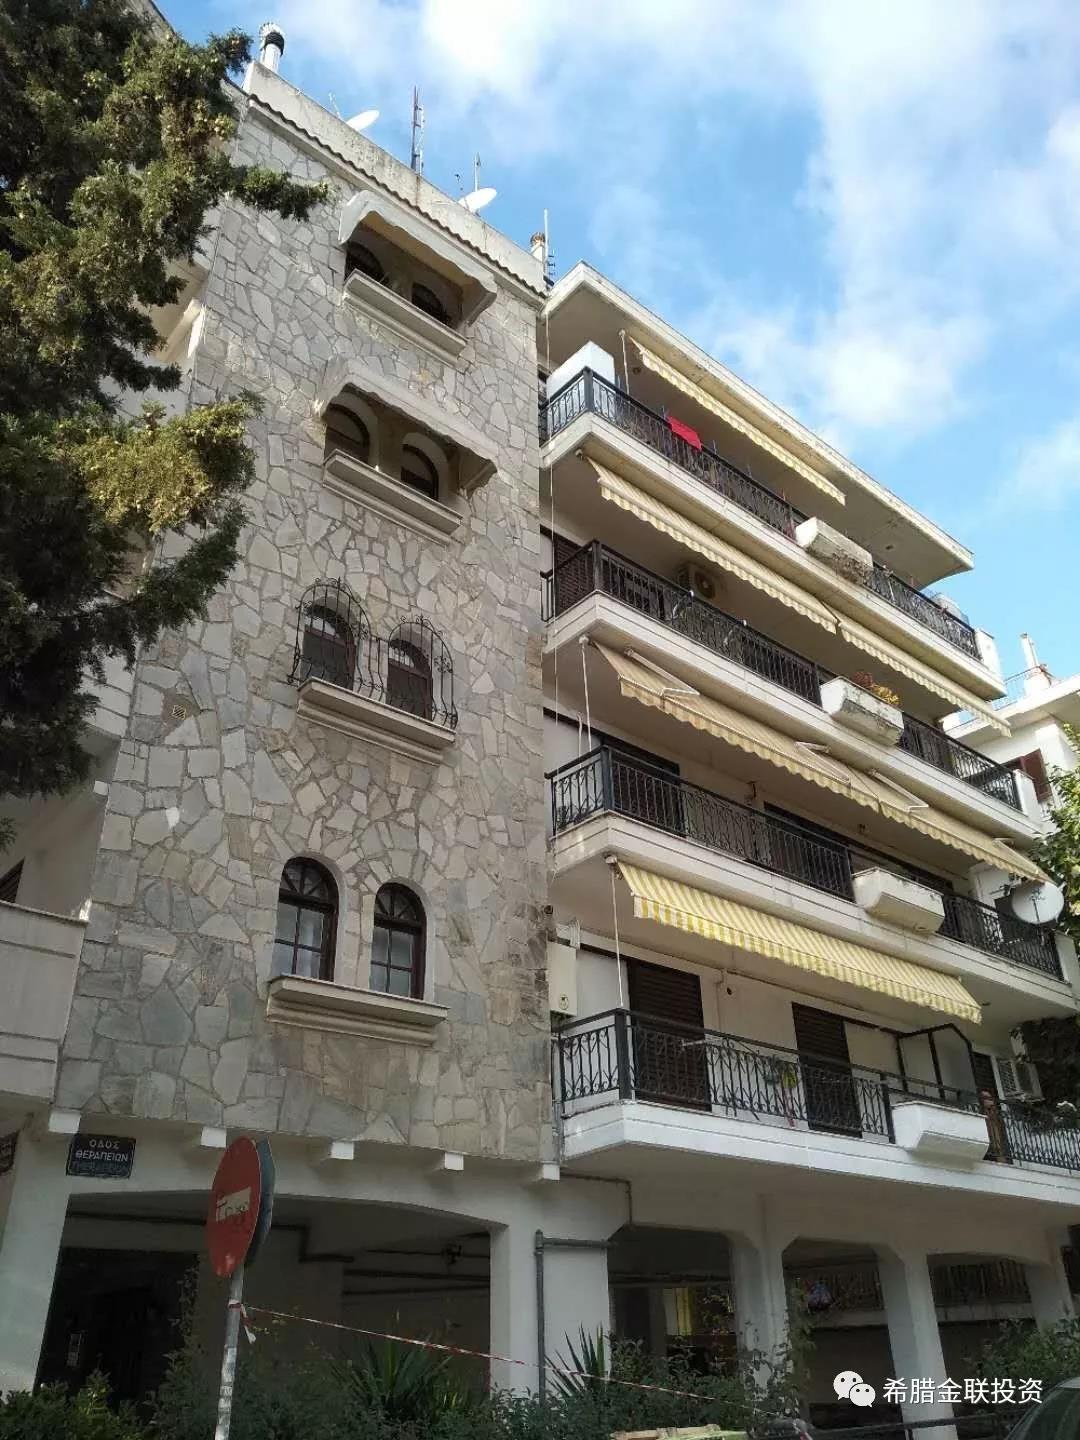 【T1907】Kalamaria of thessaloniki地区公寓出售，售价260,000€